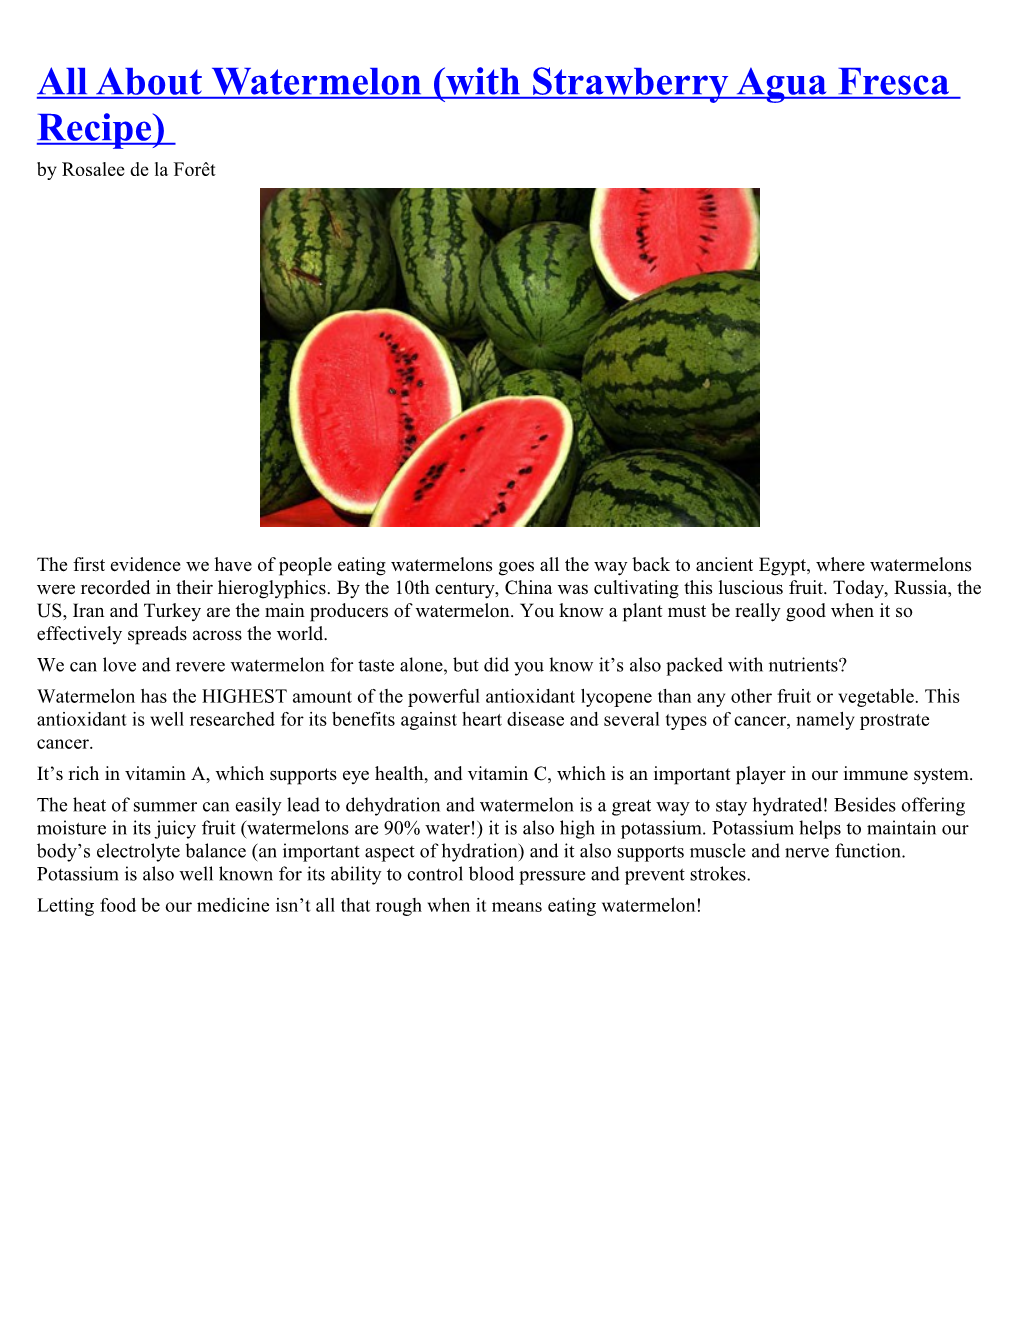 All About Watermelon (With Strawberry Agua Fresca Recipe)